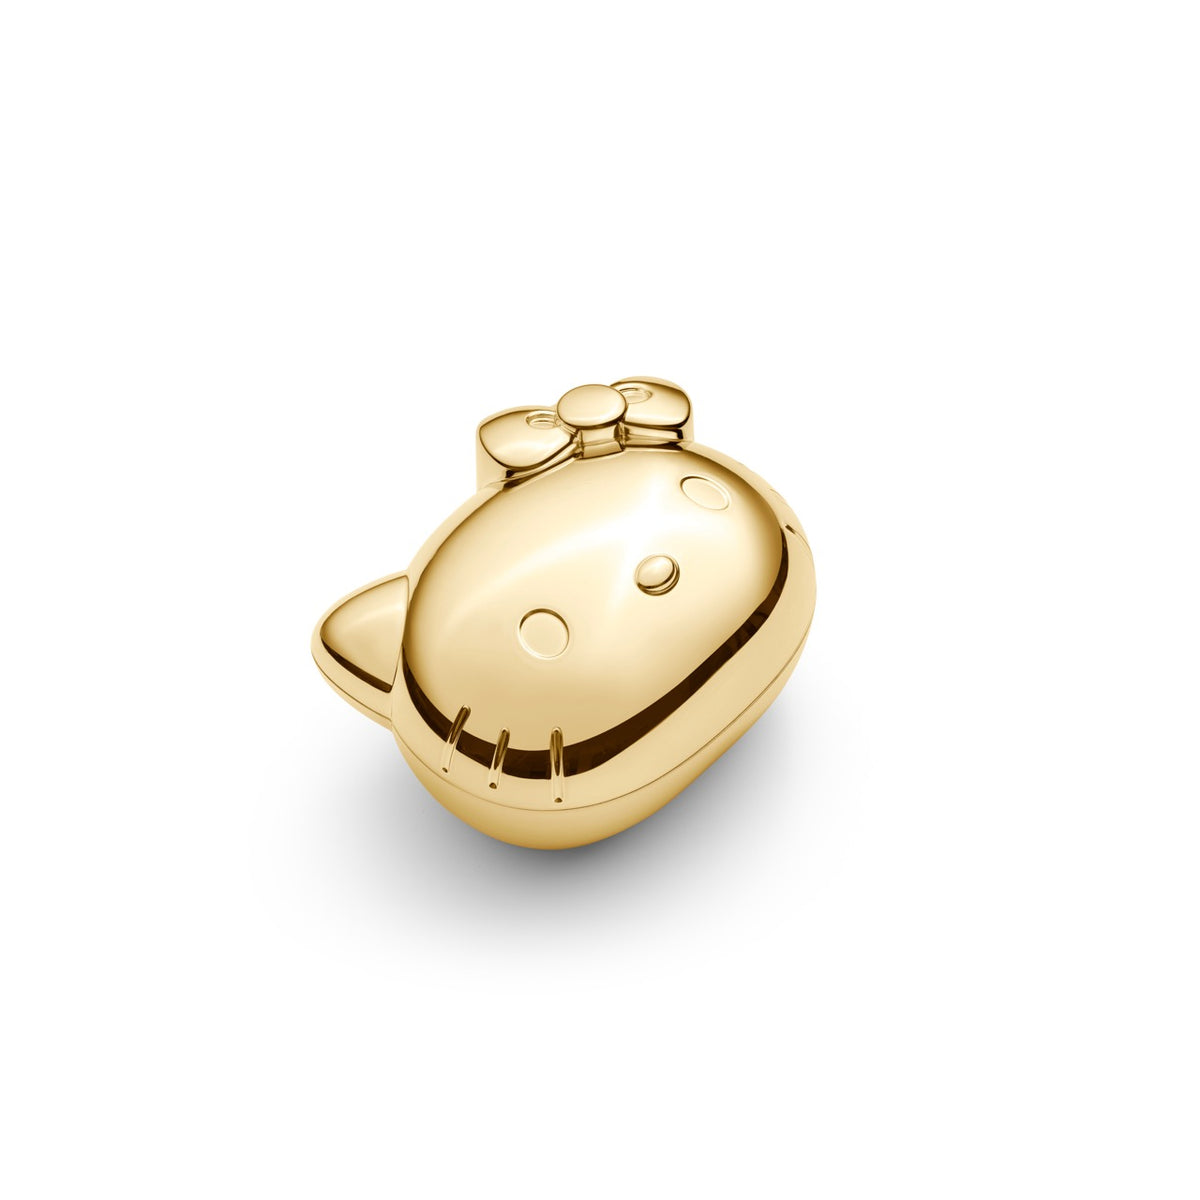 Hello Kitty x MVMT 50th Anniversary Charm Bracelet Watch Jewelry Movado Group (MVMT)   